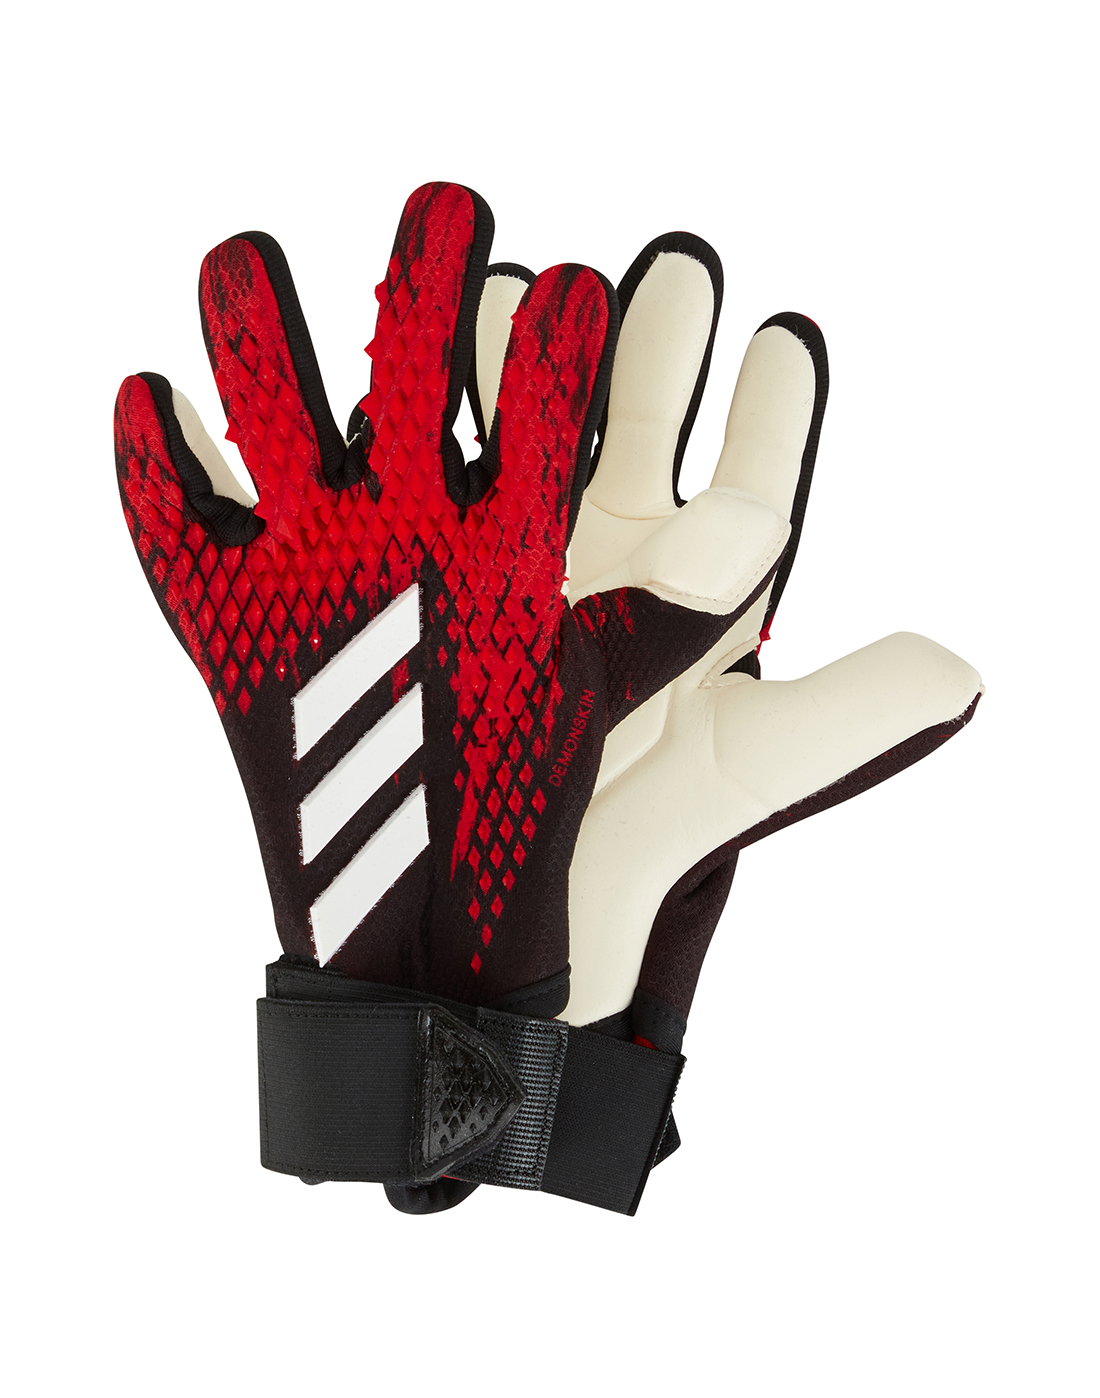 Adidas Predator Handbags Manuel Neuer in Free Market.